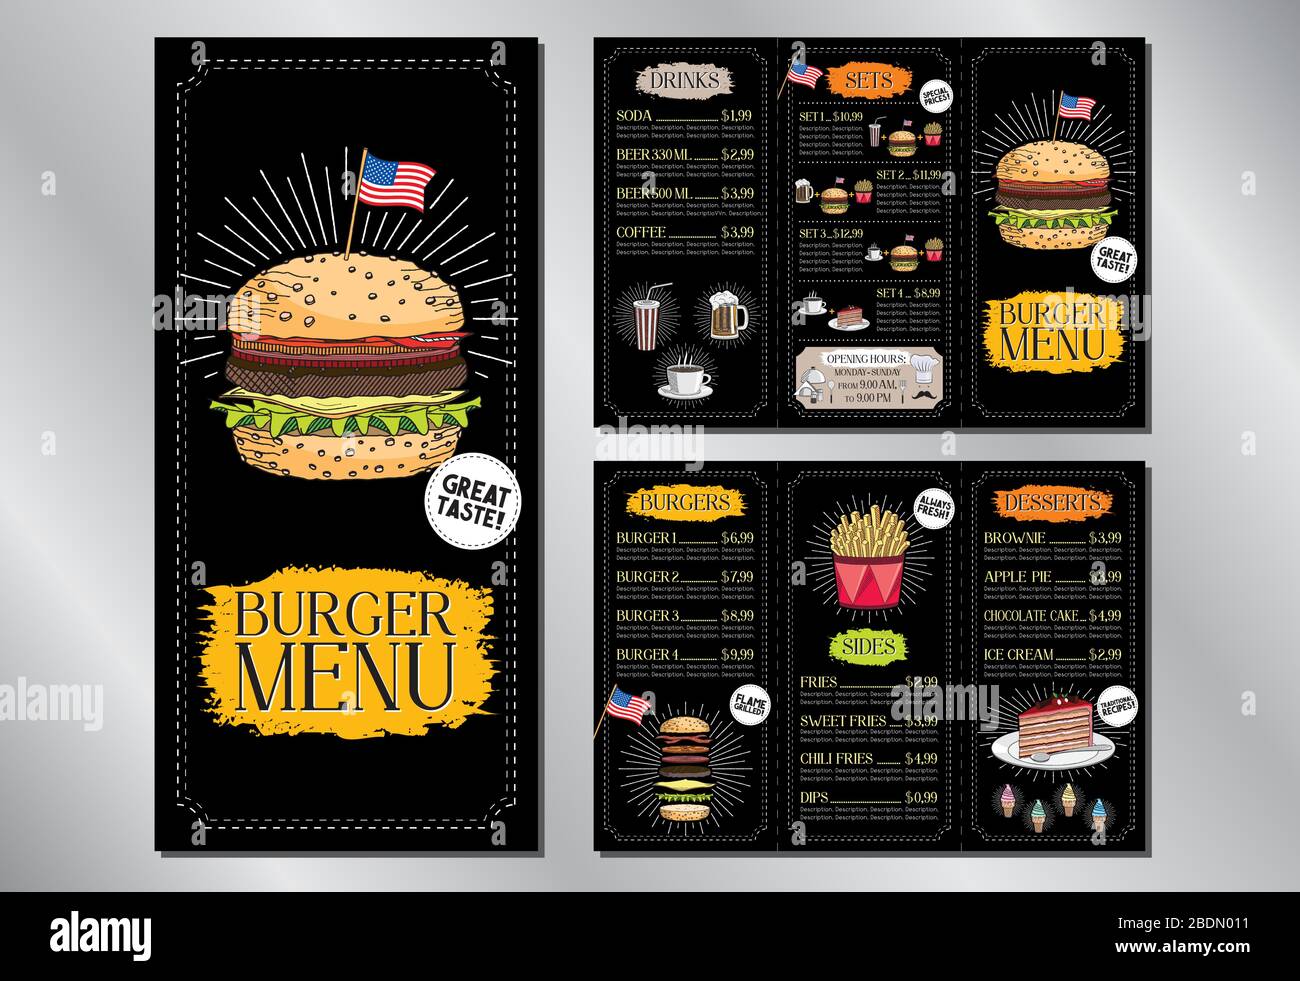 Folleto de la plantilla del menú del restaurante/bar Burger (hamburguesas,  patatas fritas, postres, bebidas, juegos) - 3 x DL (99x210 mm Imagen Vector  de stock - Alamy